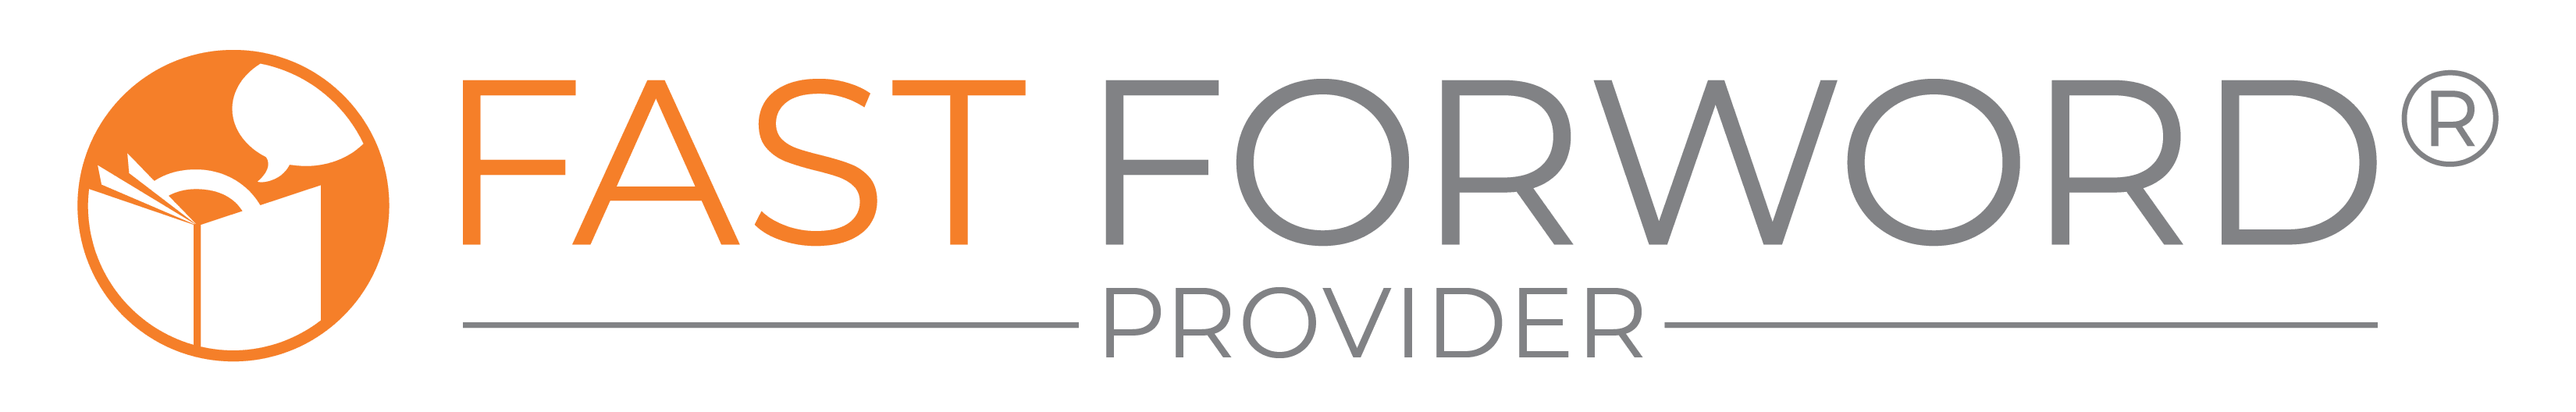 FFW Provider Logo